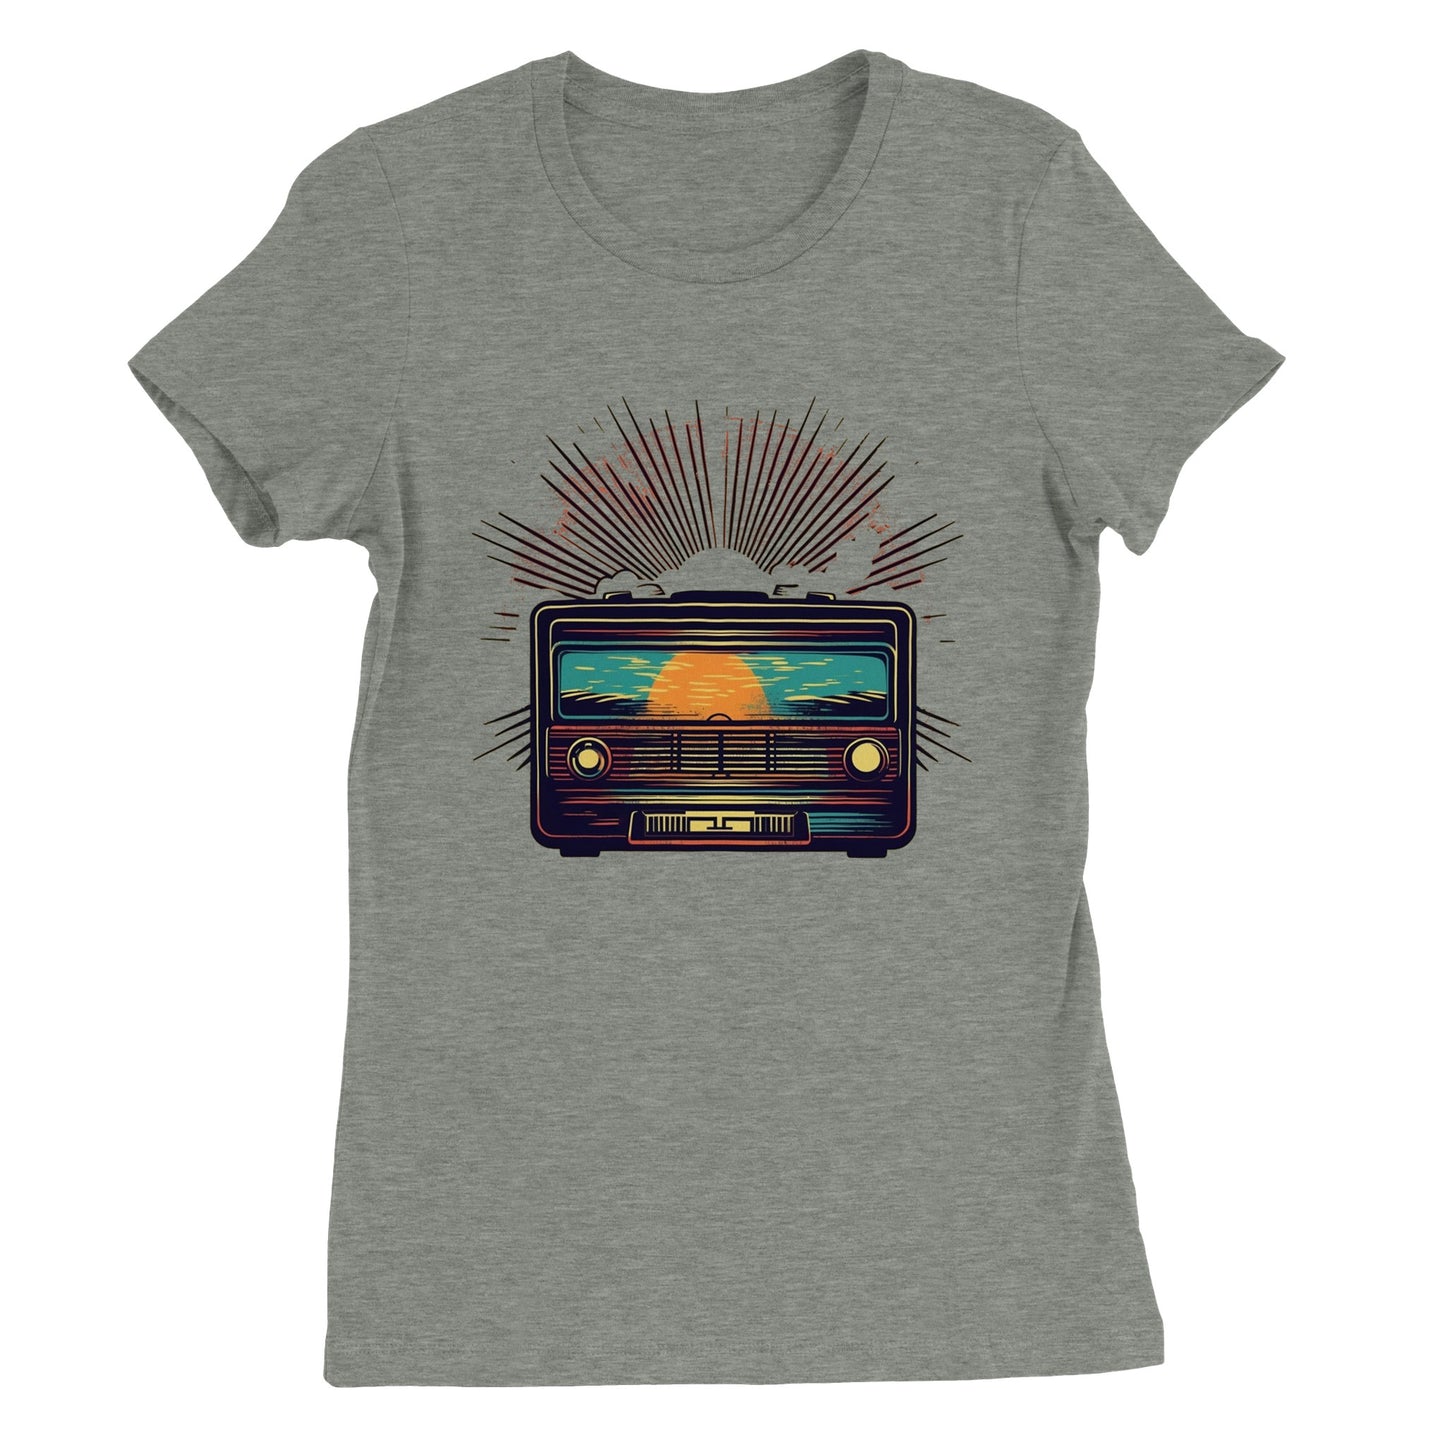 Artwork T-shirt - Vintage Radio Artwork - Premium Women's T-shirt 